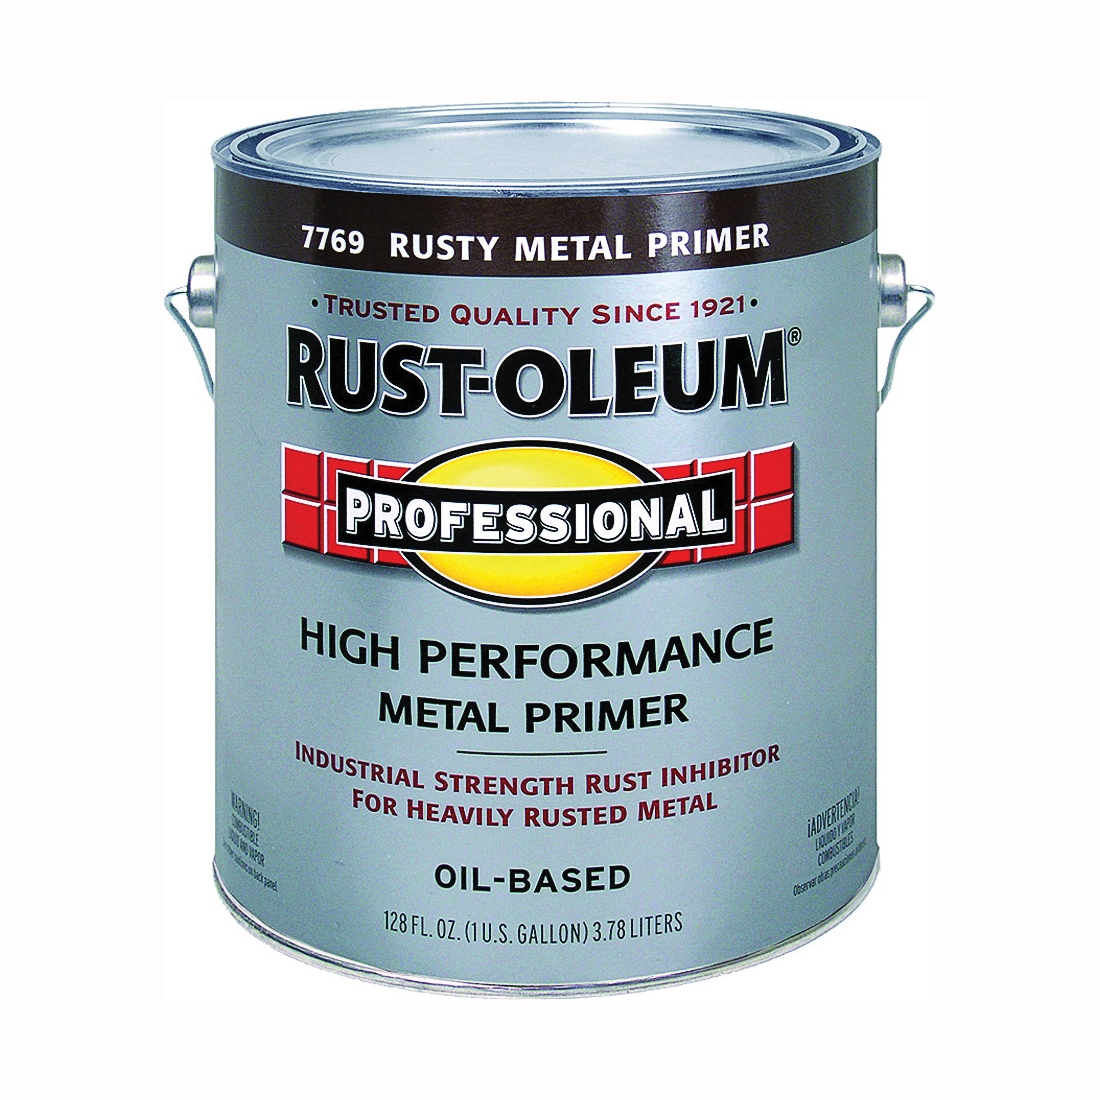 Rust-Oleum 7769402 Primer, Flat, Flat Rusty Metal Primer, 1 gal - 1